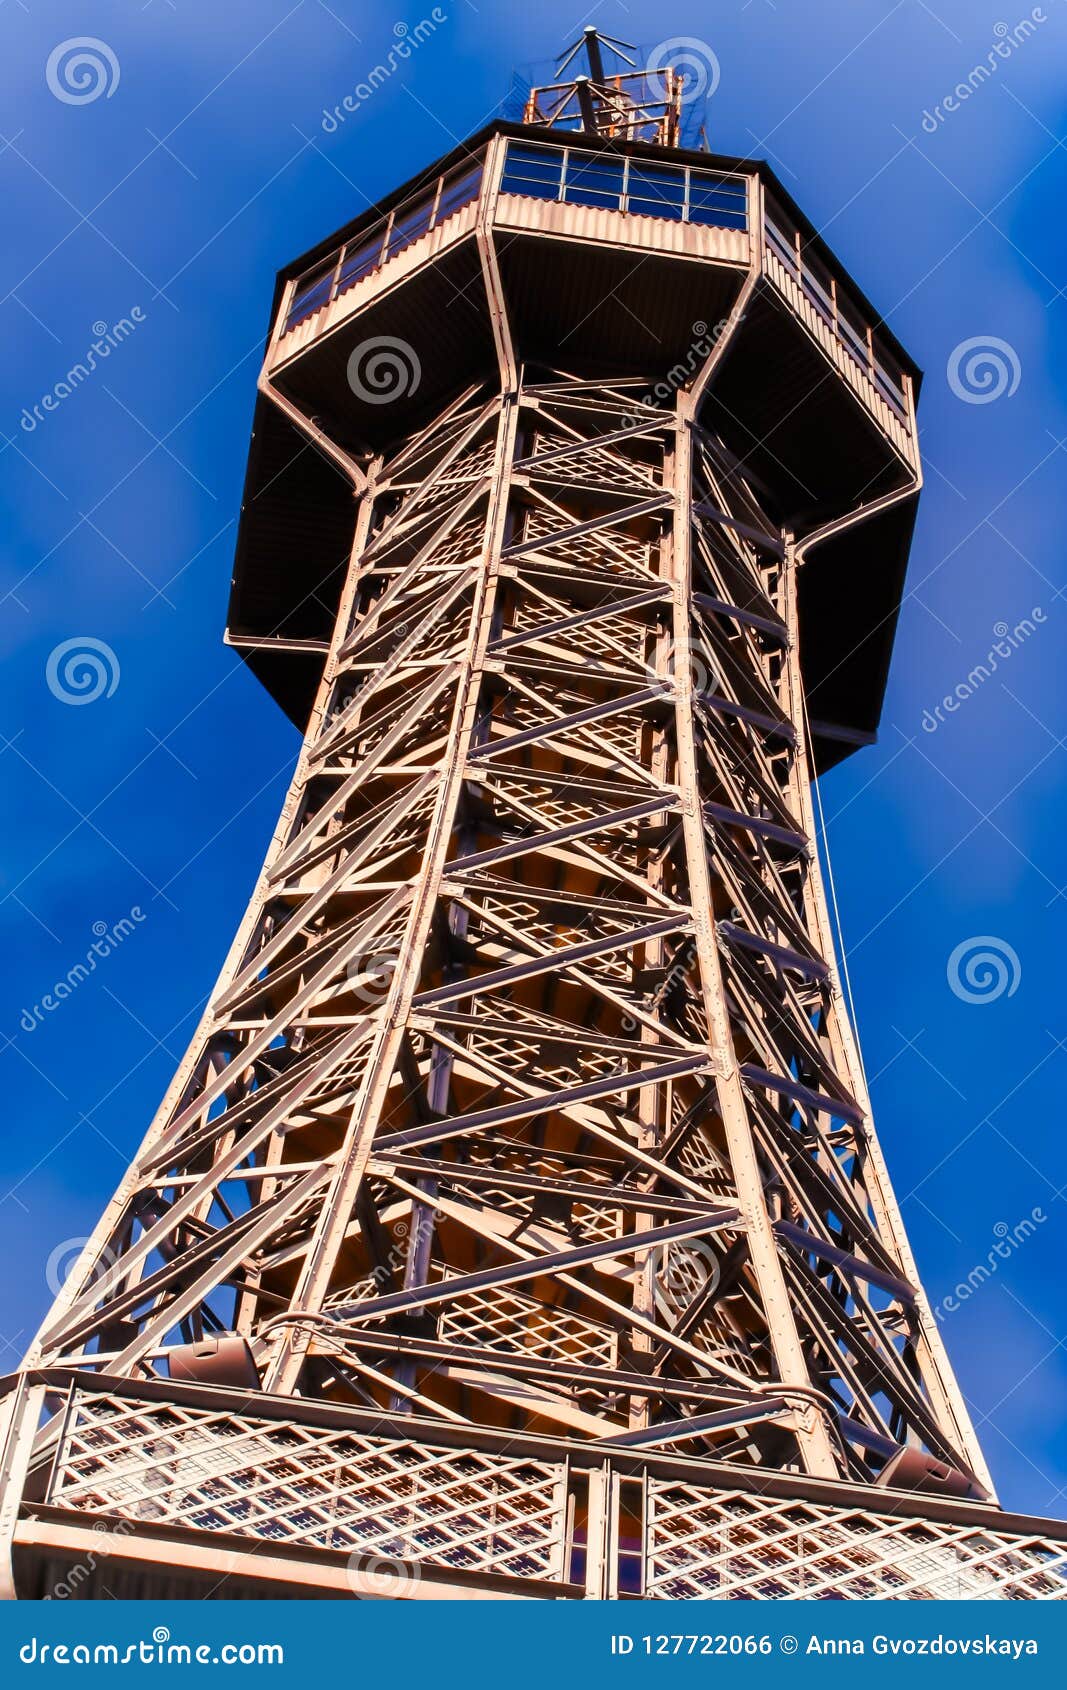 petrin lookout tower petrinska rozhledna in prague